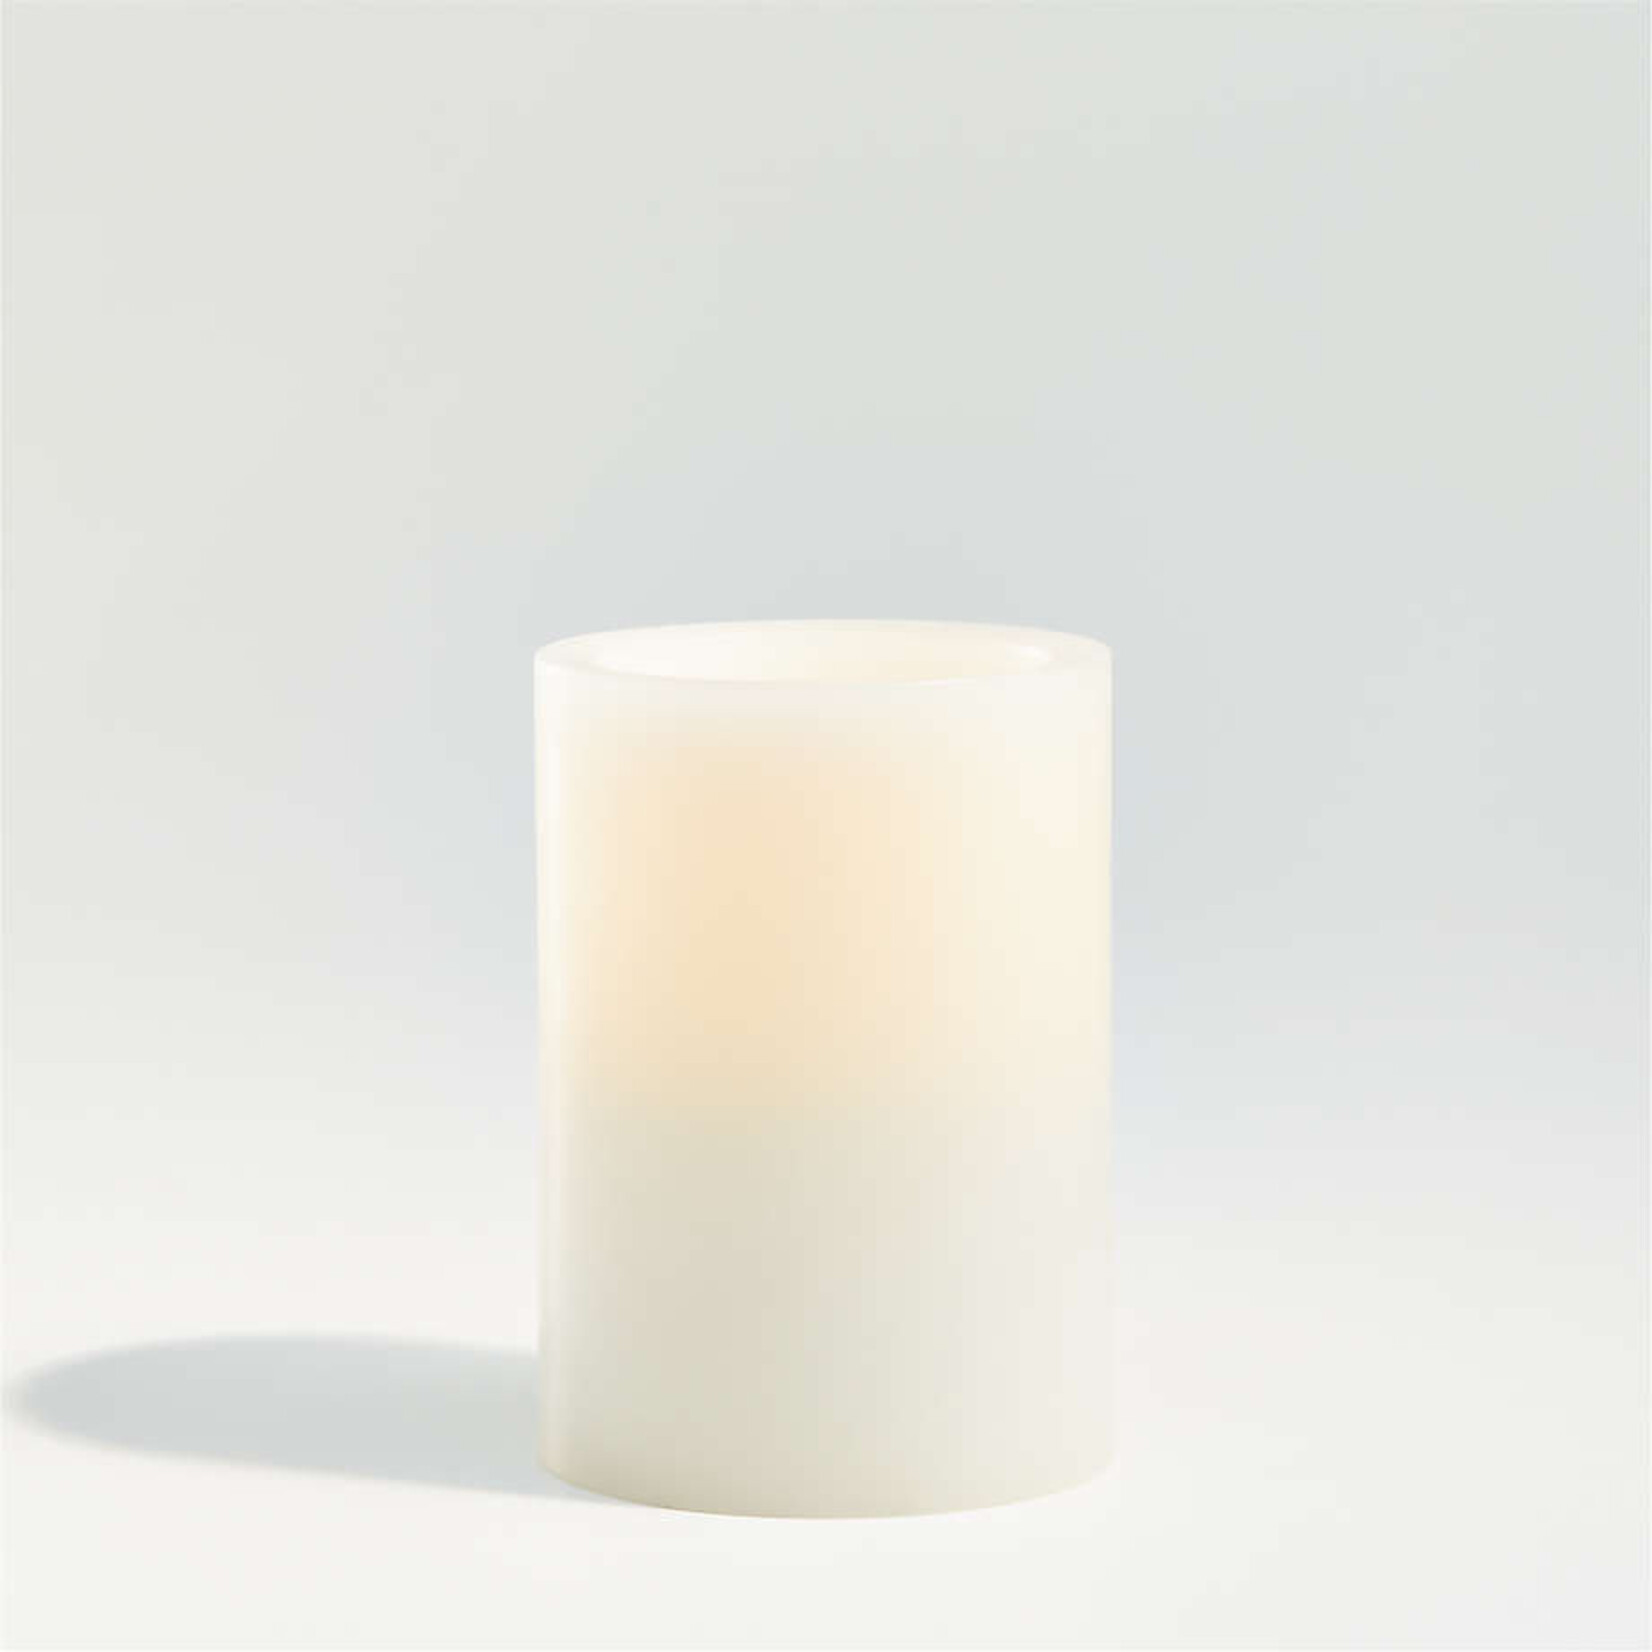 Everlasting Glow LED Wax Pillar Candle